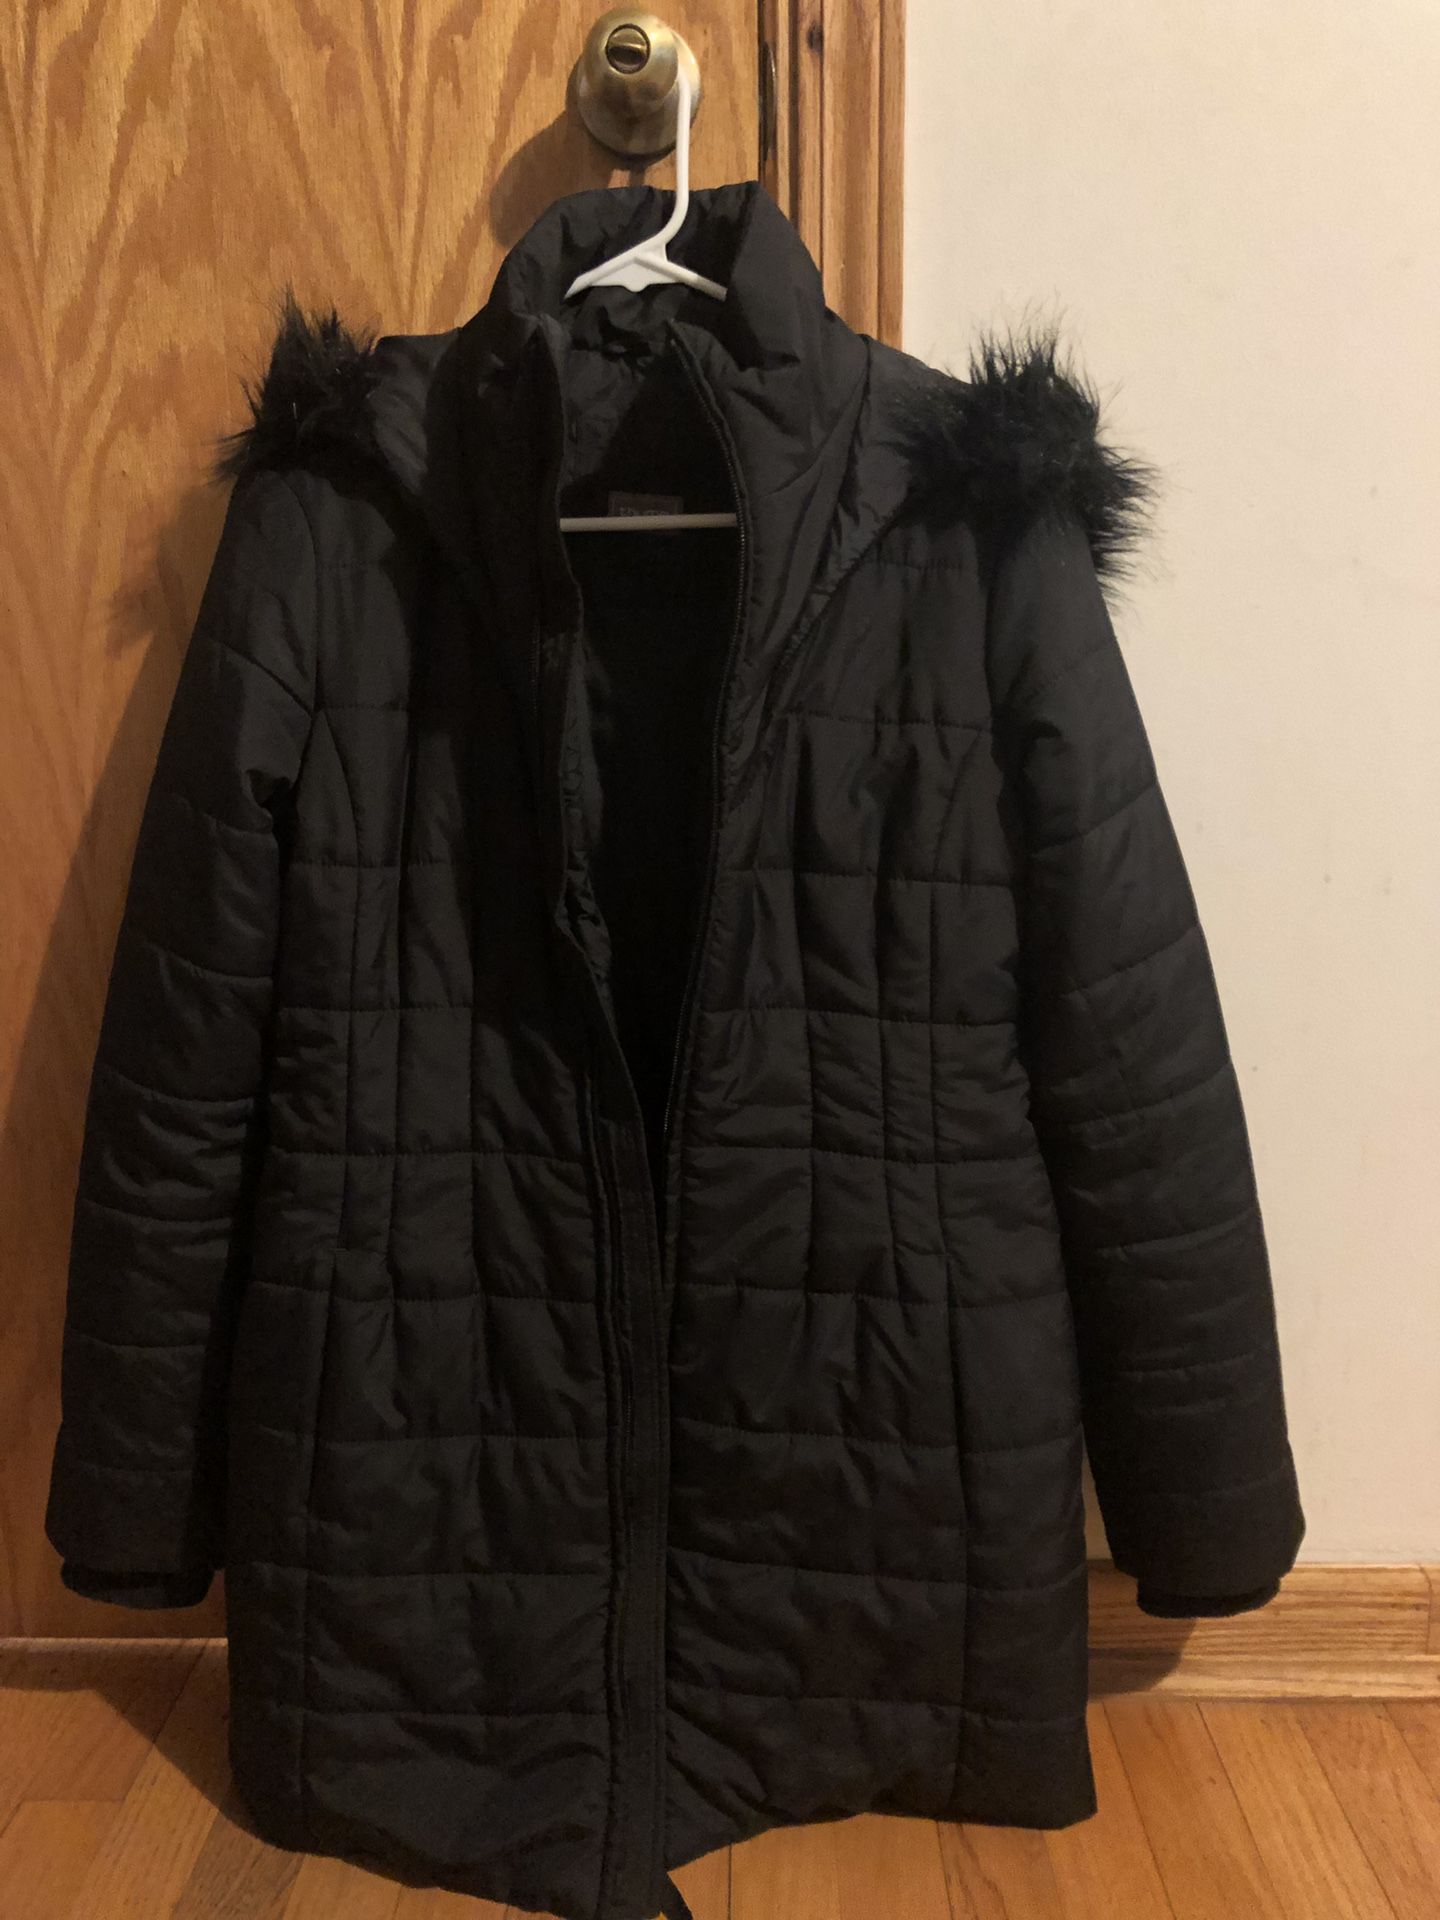 Women’s Thyme Brand jacket size small/medium $20